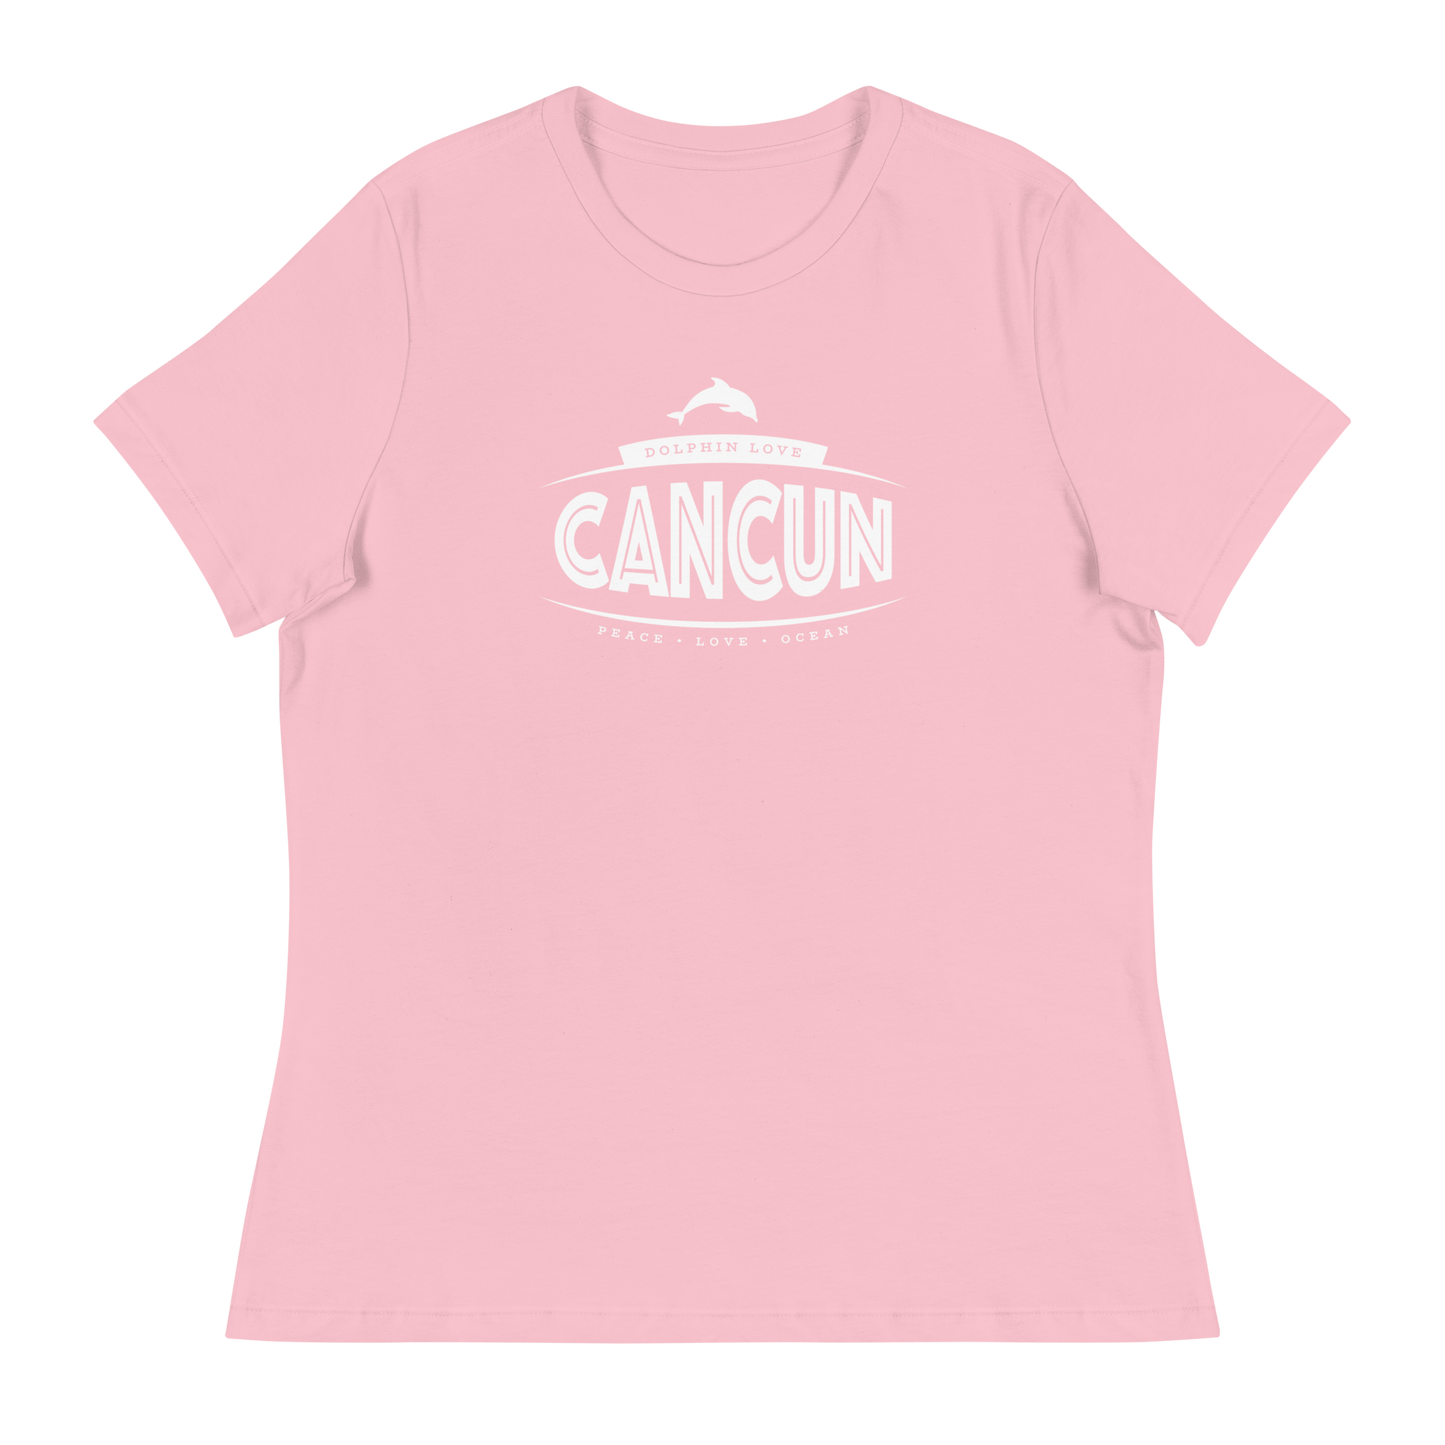 Women's - CANCUN - Dolphin Love - Peace • Love • Ocean T-Shirt